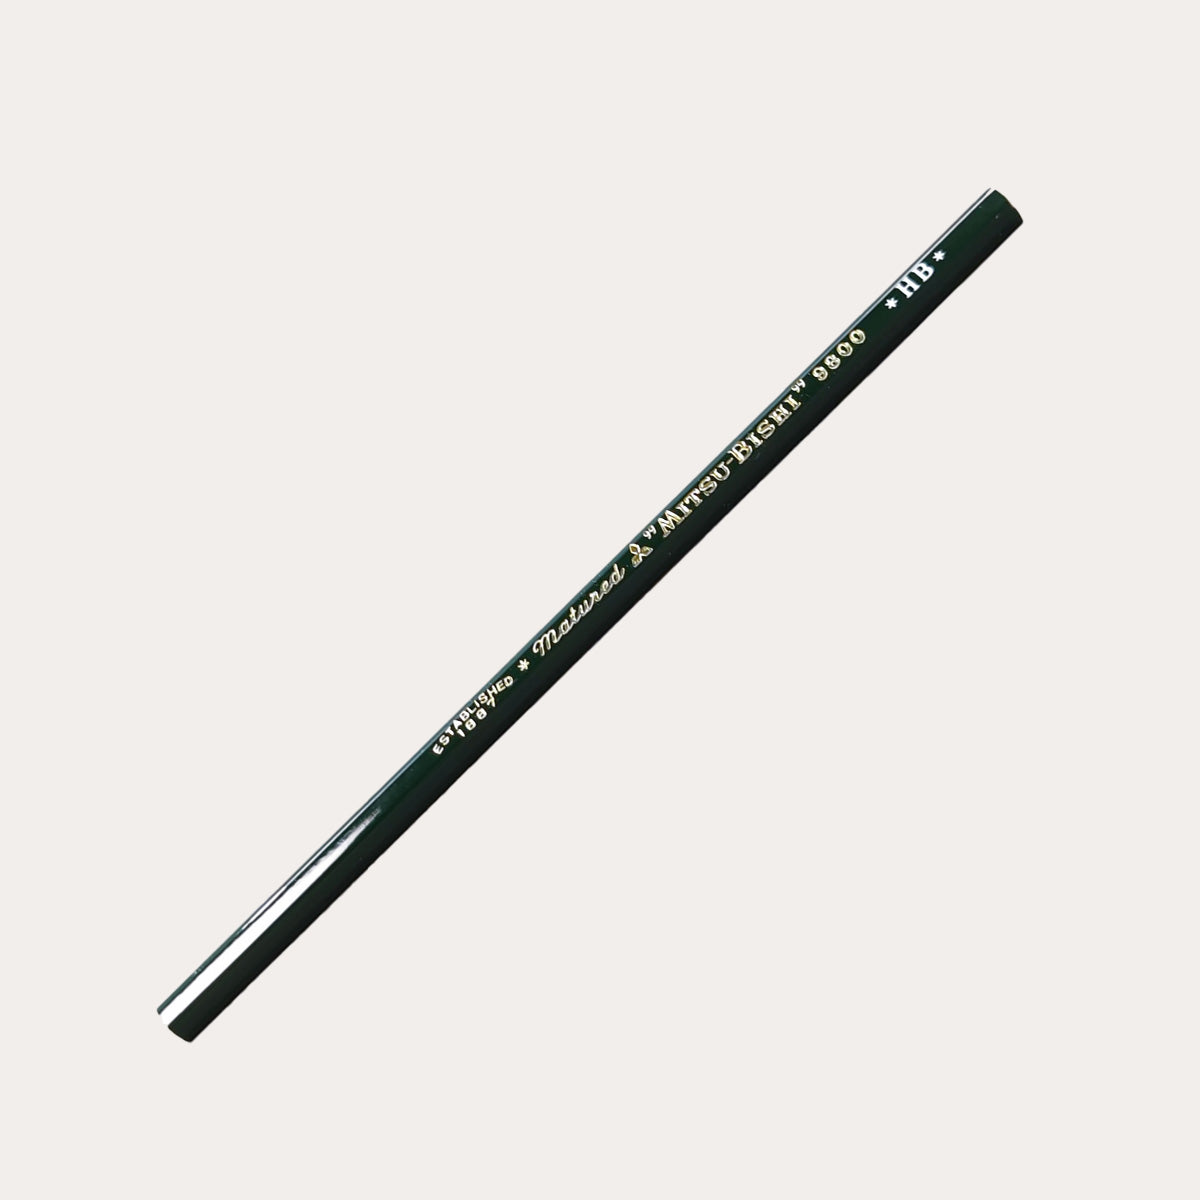 Mitsubishi Pencil 9800 HB 12 Pack